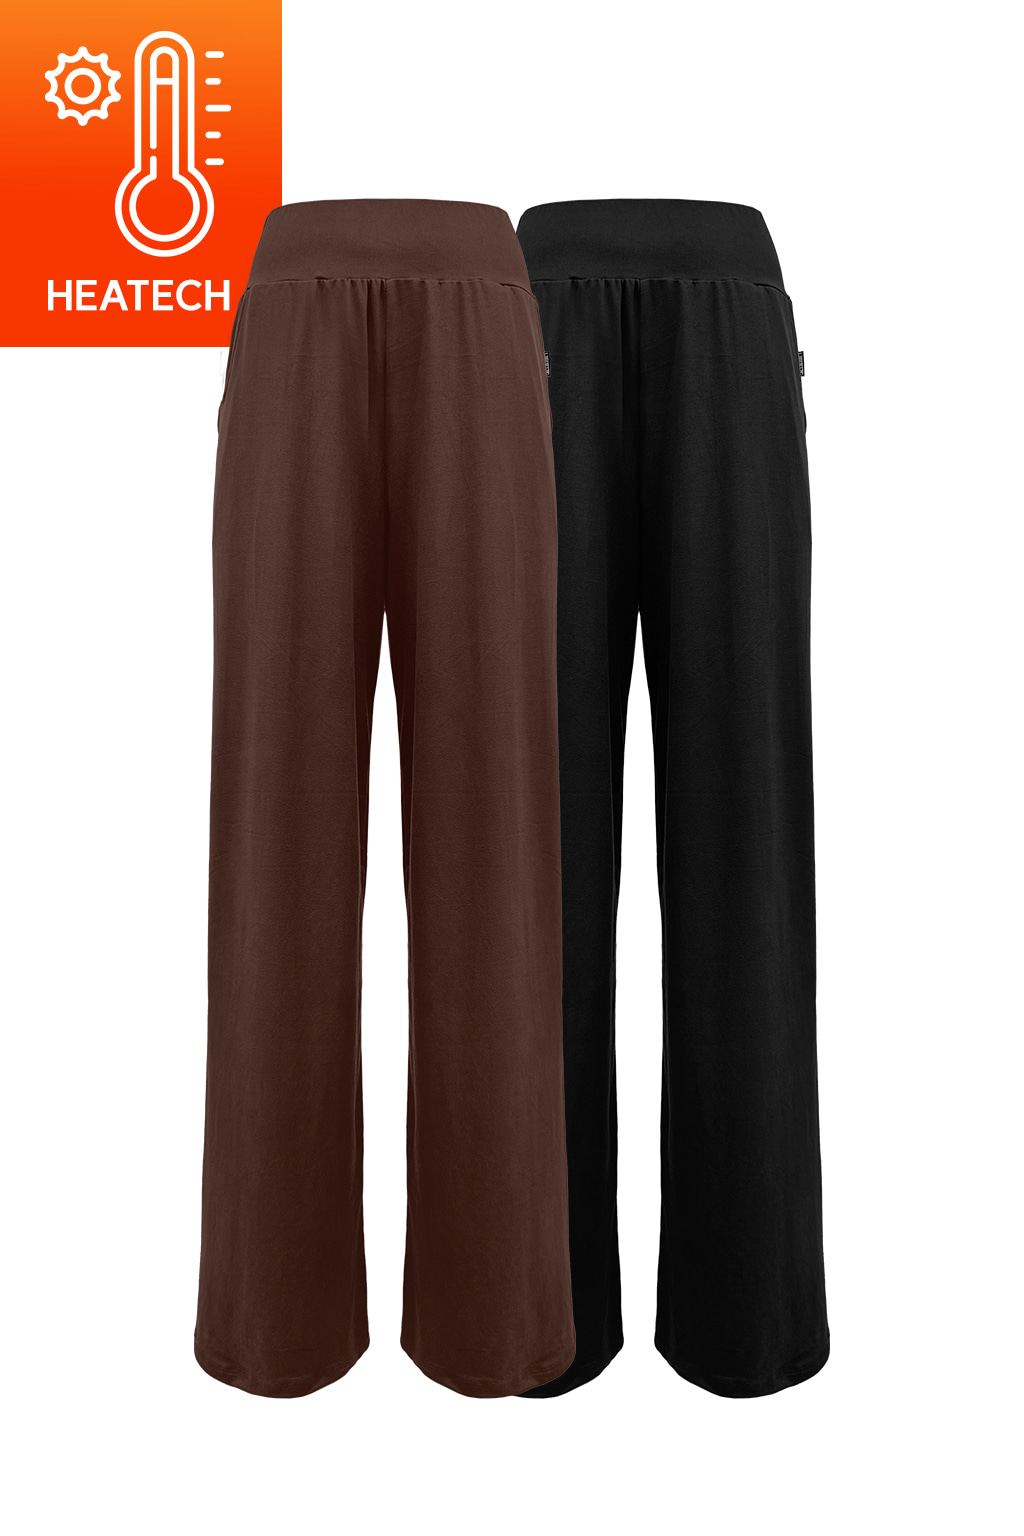 [Biggest discount] Heattech Ant-waist Banded Waist Wide Leg Pants - 2 colors